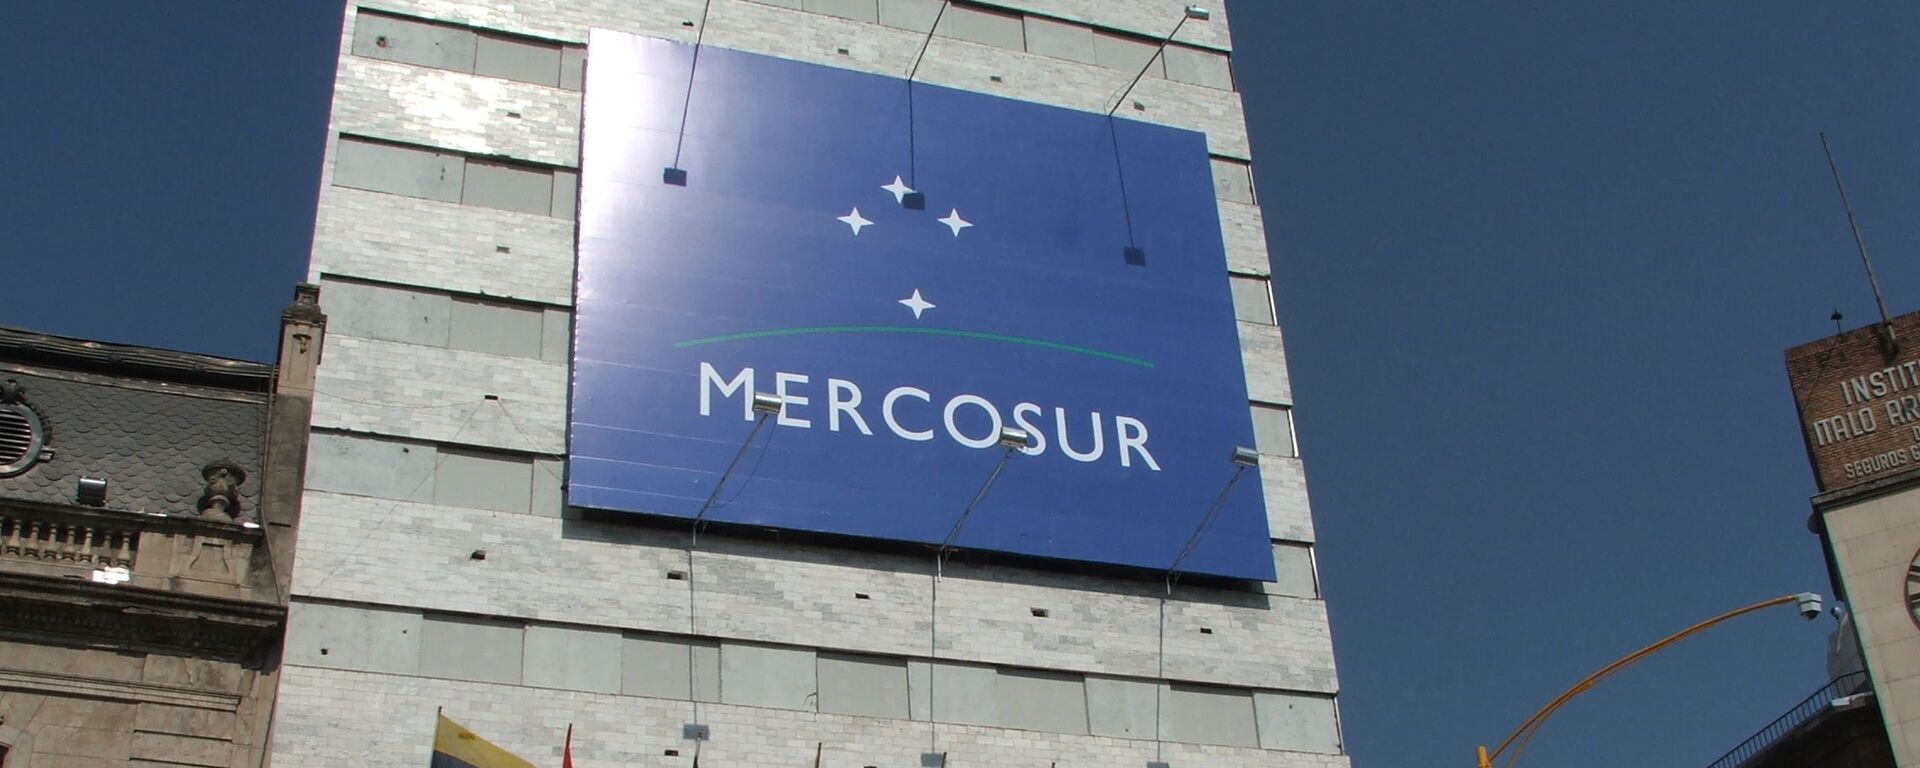 Sede de Mercosur - Sputnik Mundo, 1920, 25.03.2021